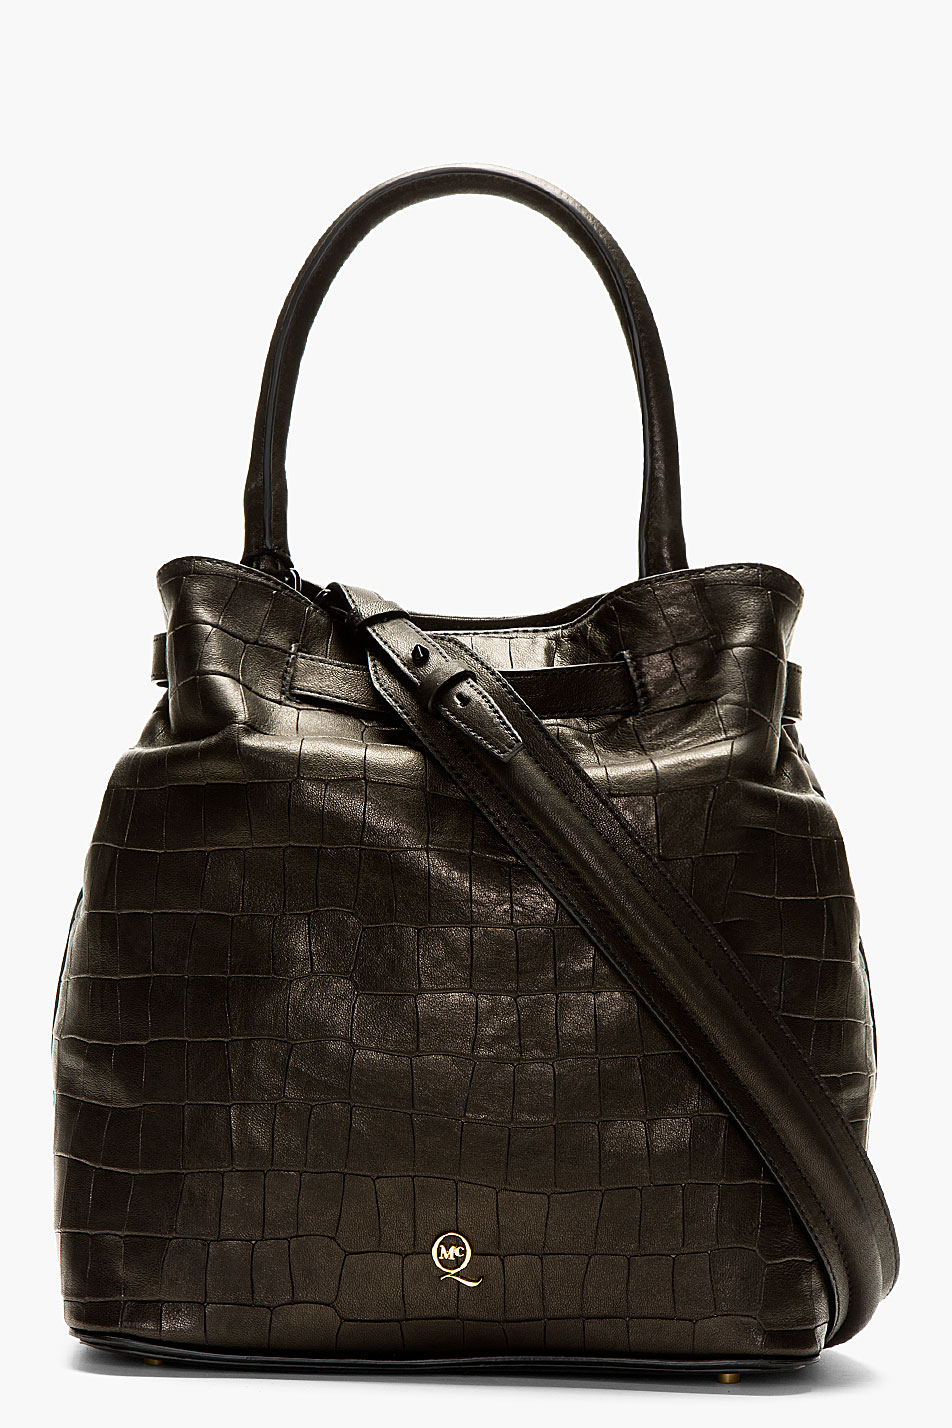 Mcq By Alexander Mcqueen Black Leather Croc-embossed Shoulder Bag in Animal (black) | Lyst